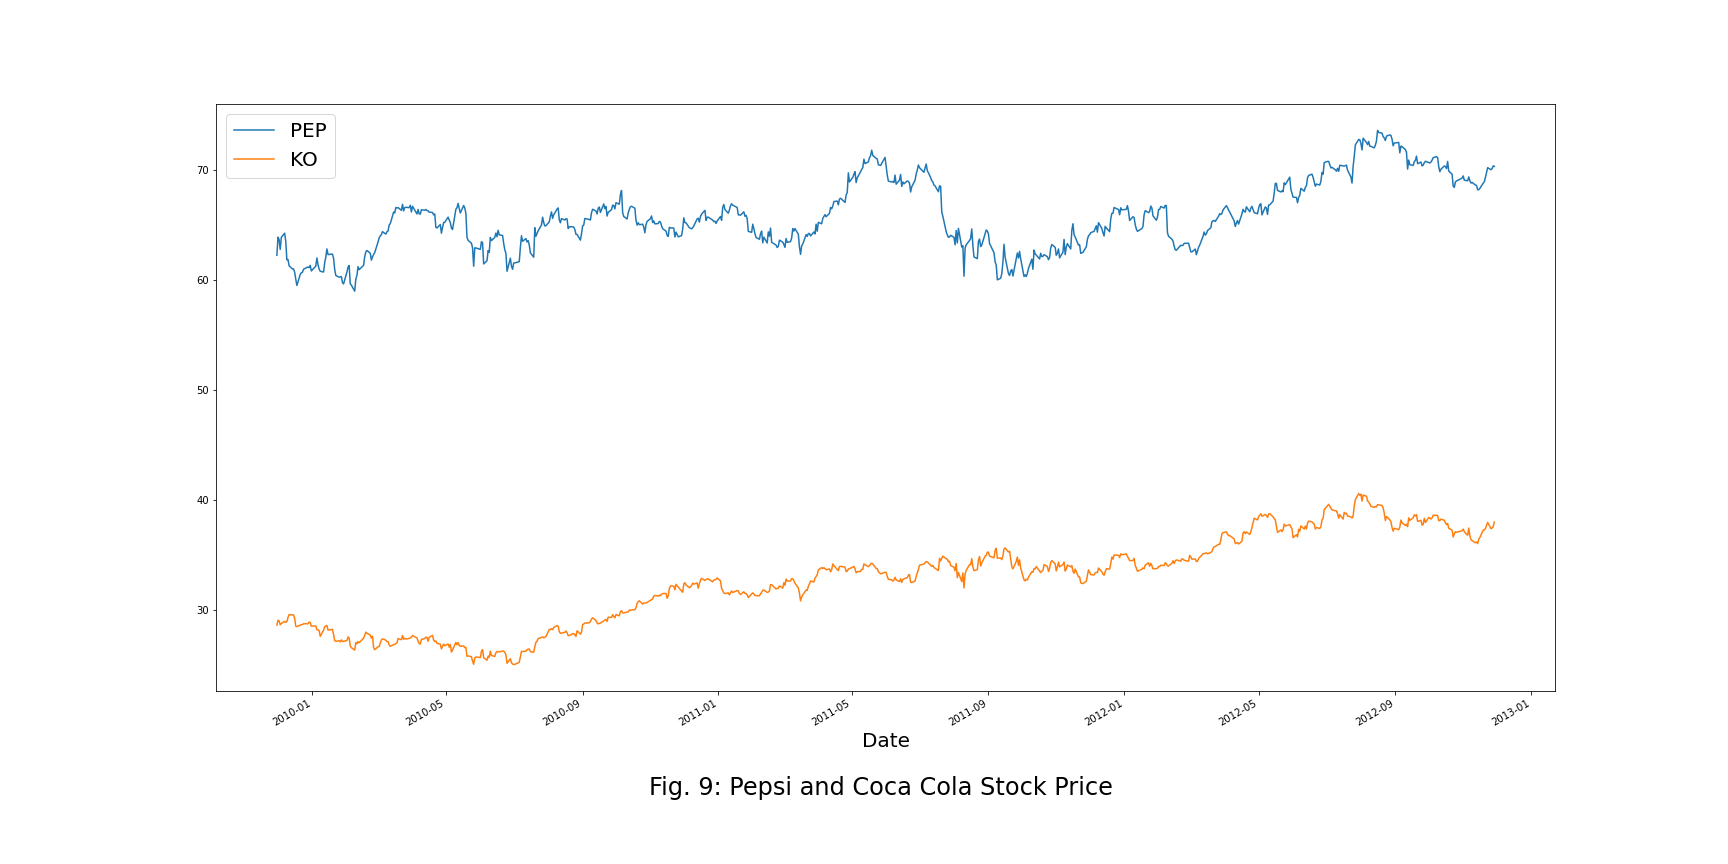 Pepsi and Coca Cola Stock Prices